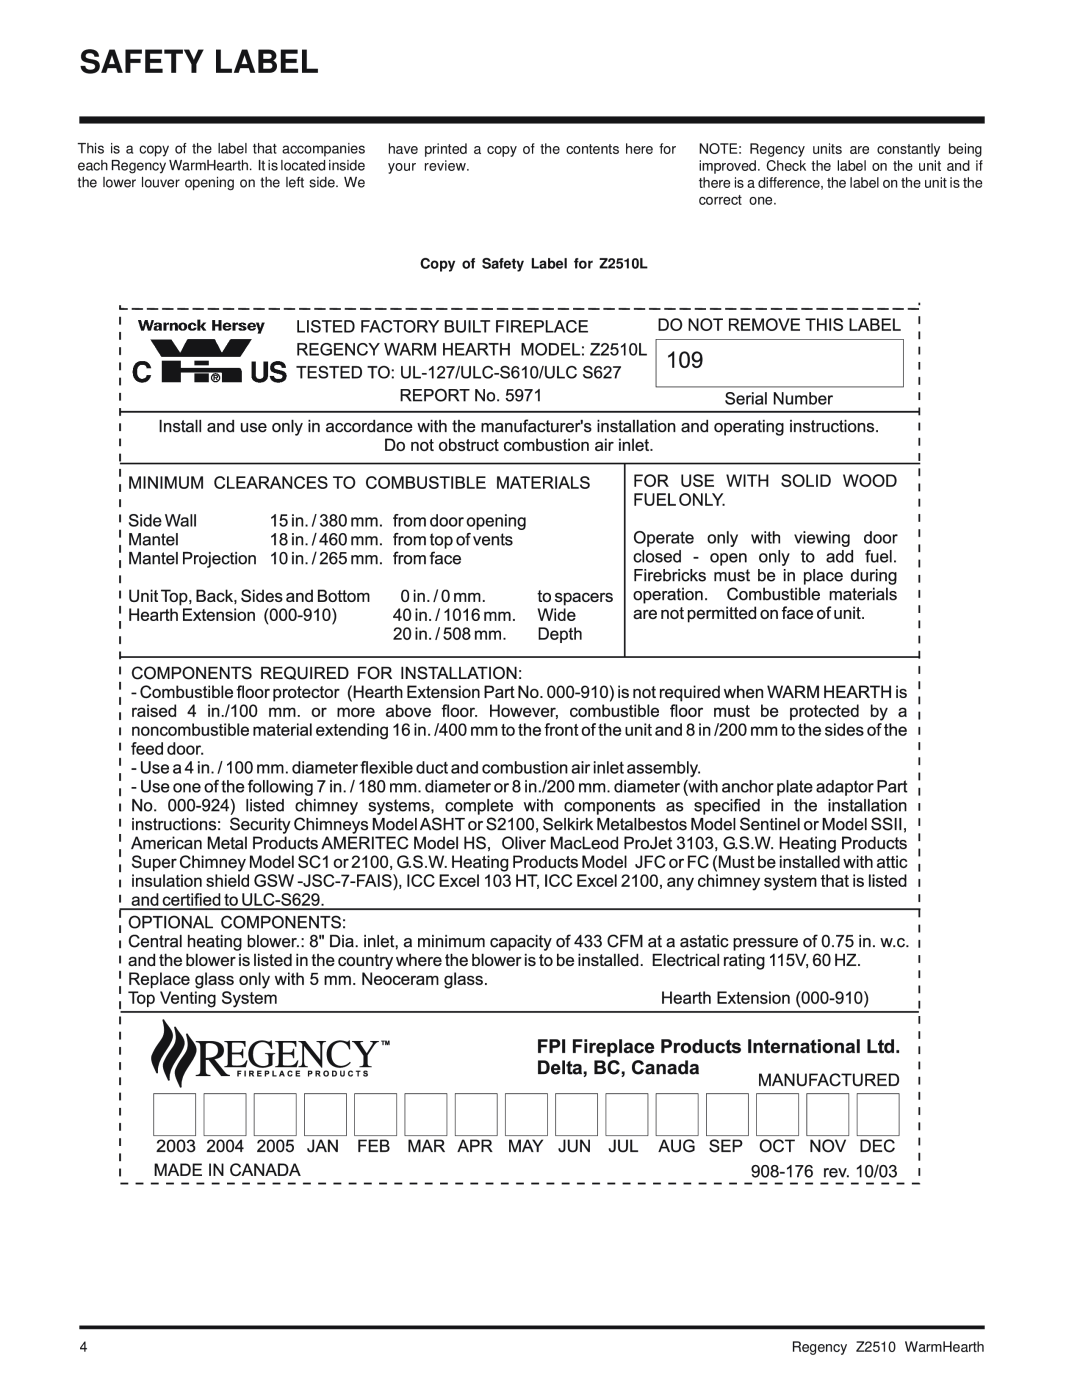 Regency Wraps installation manual Copy of Safety Label for Z2510L 